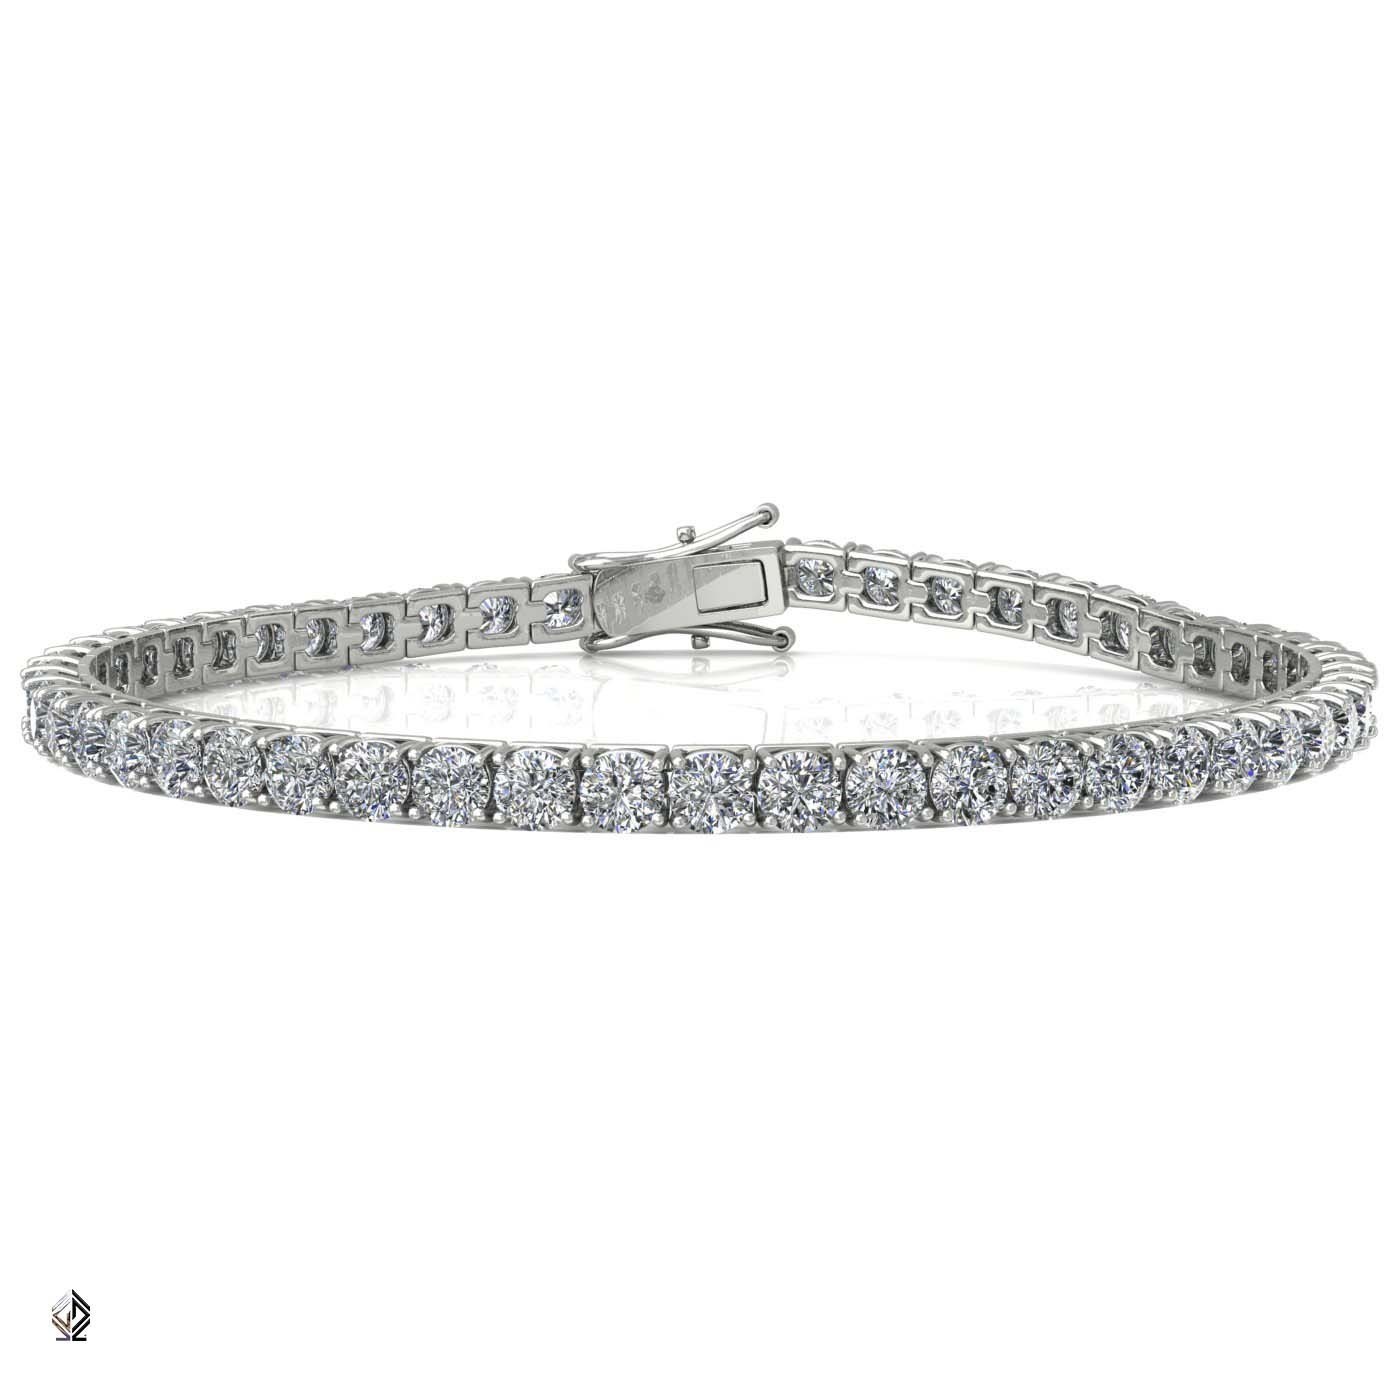 18k white gold 2.8mm 4 prong round shape diamond tennis bracelet in square setting